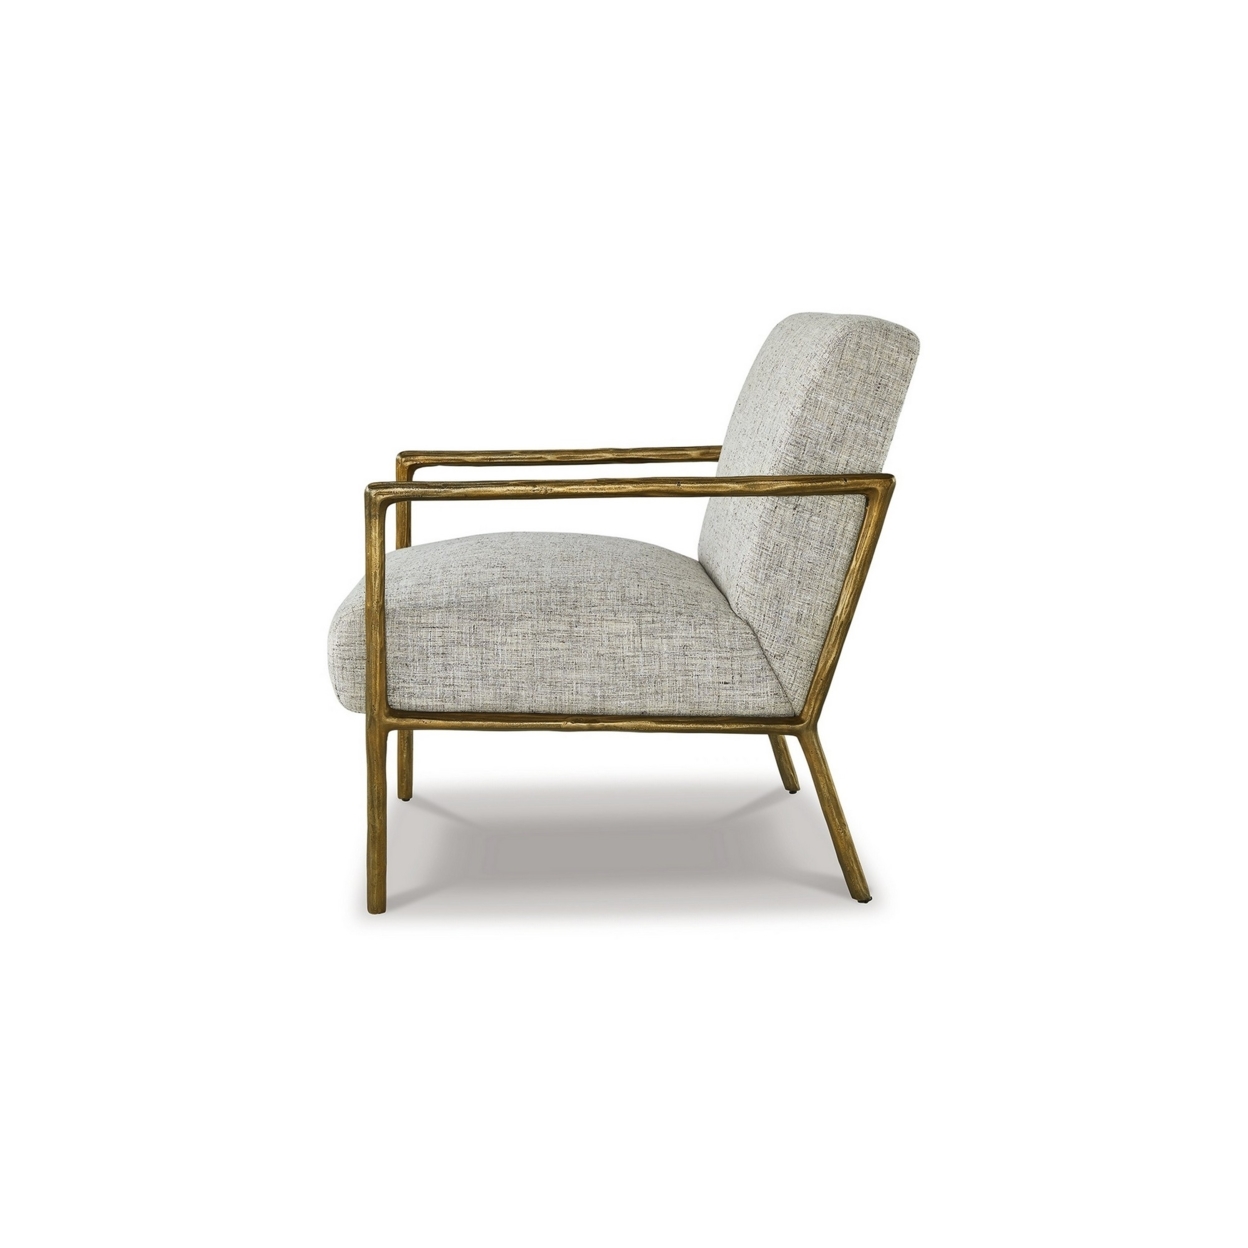 Tusk 30 Inch Accent Chair, Classic Brass Aluminum Frame, Gray Upholstery- Saltoro Sherpi